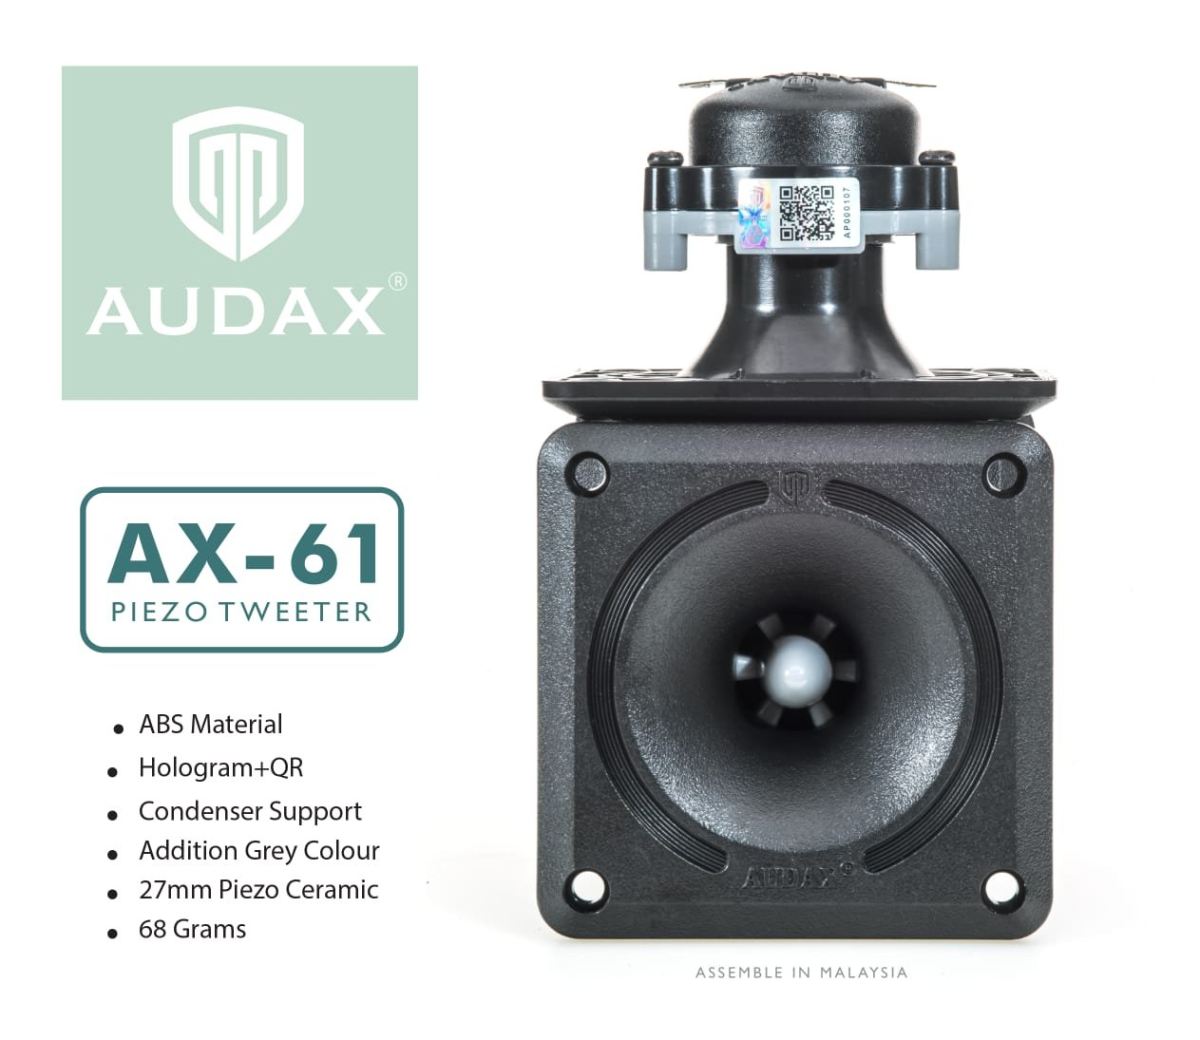 Audax AX-61 Piezo Tweeter (For Swiftlet Farming Used)